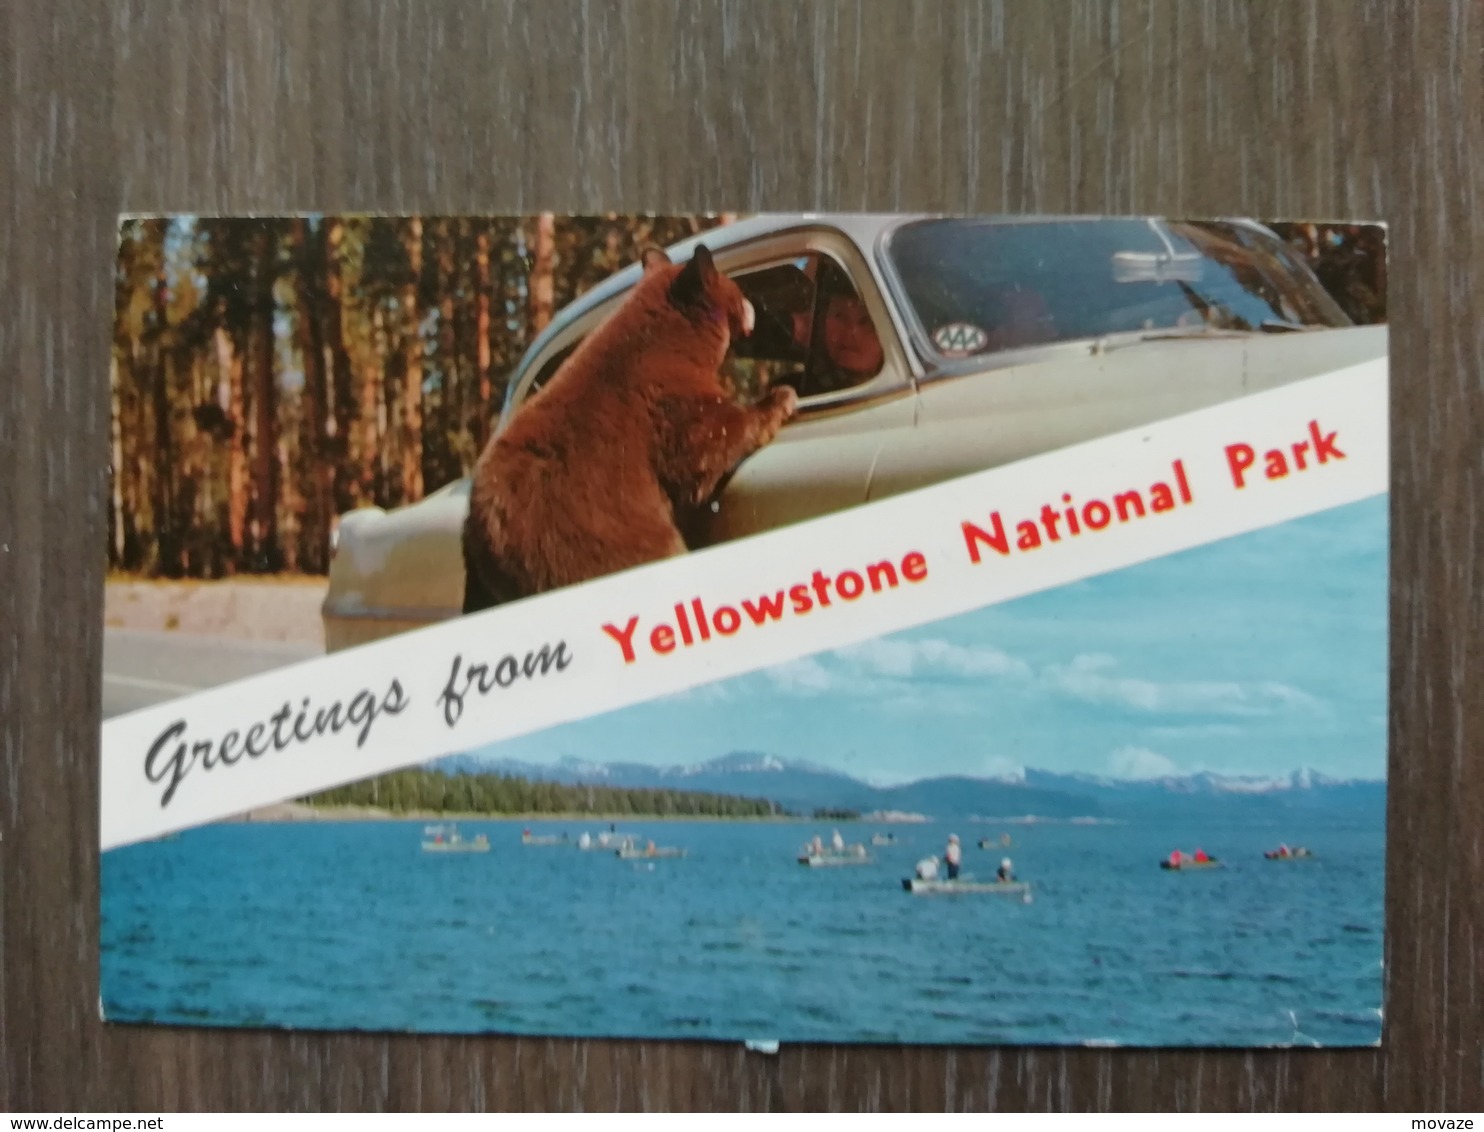 Greetings From Yellowstone - Yellowstone